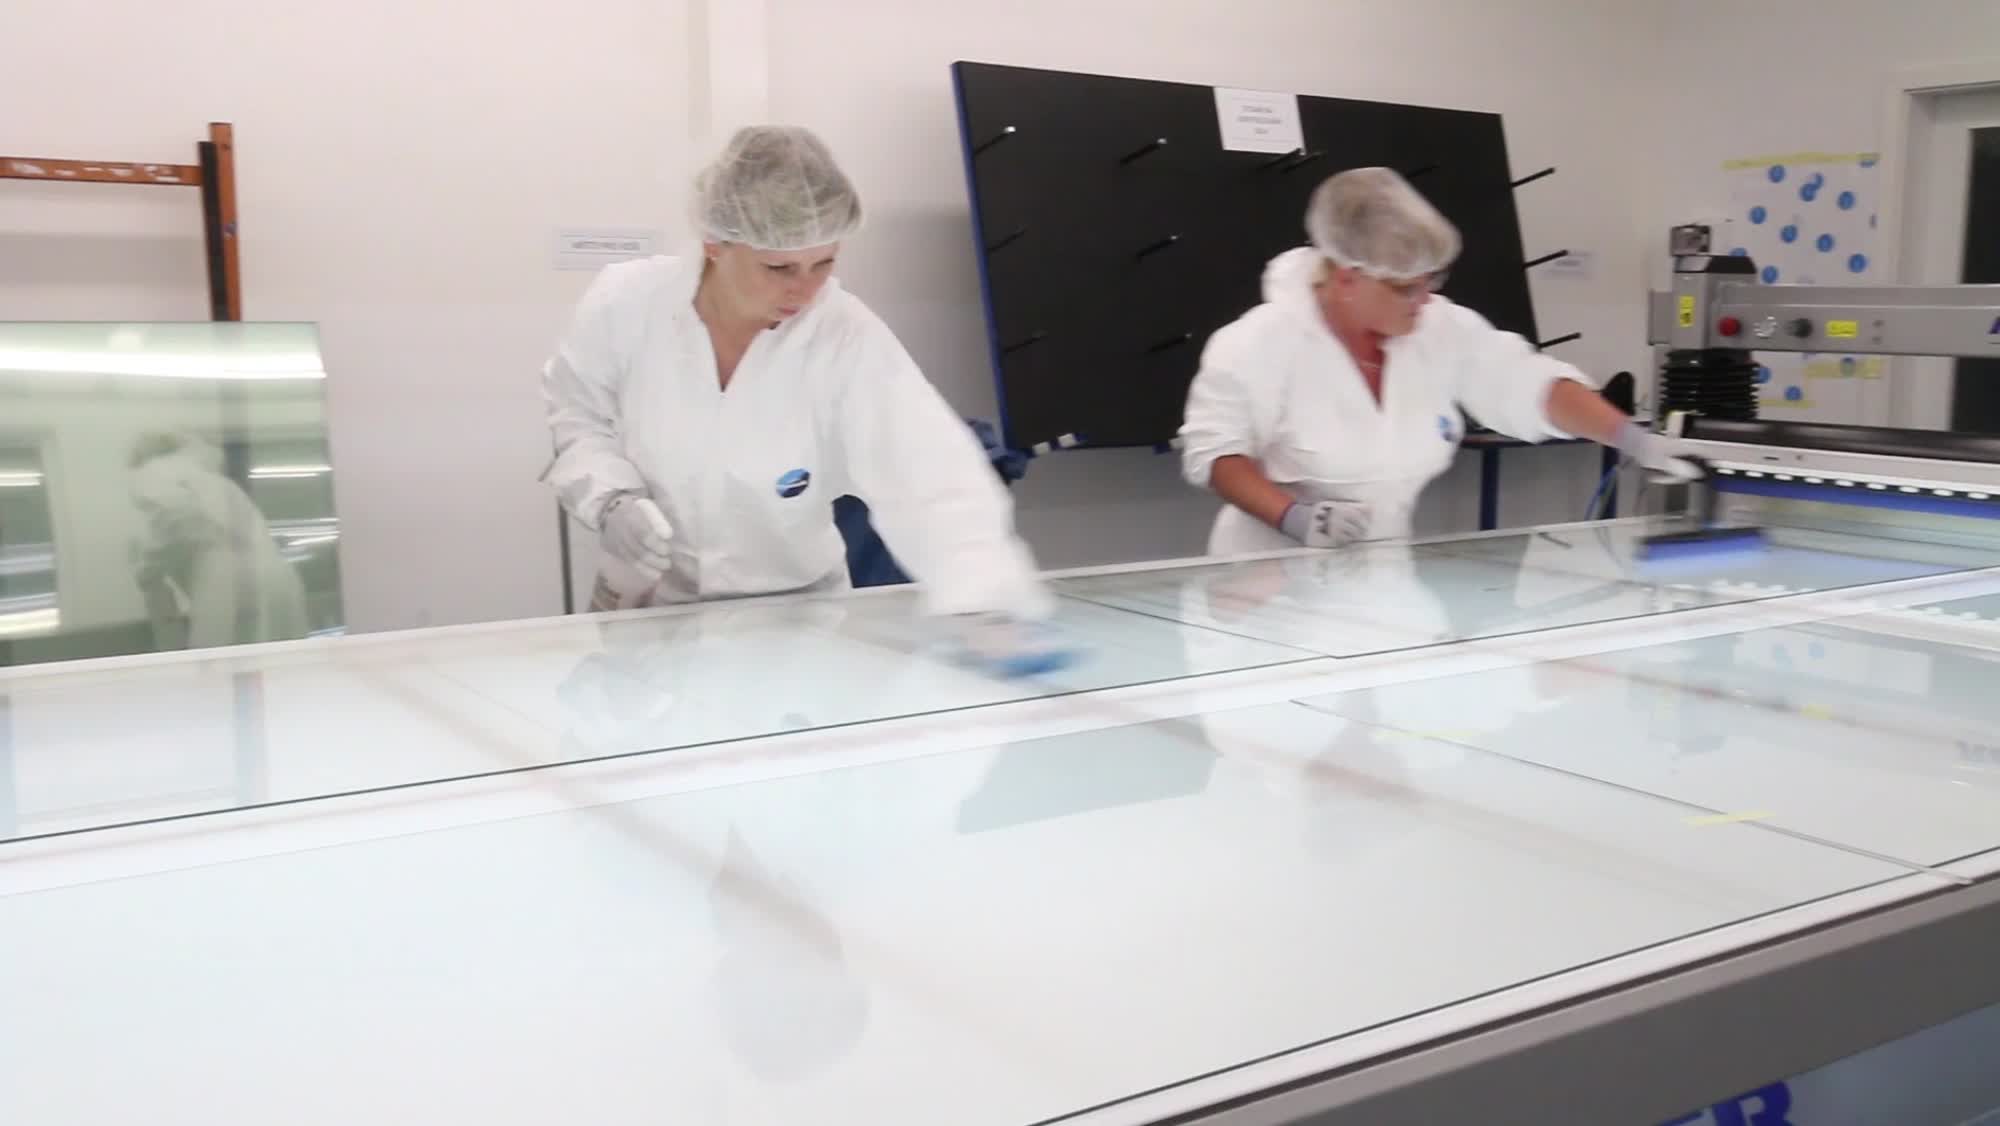 Video showing the SCHOTT production facility in Valasske Mezirici, Czech Republic